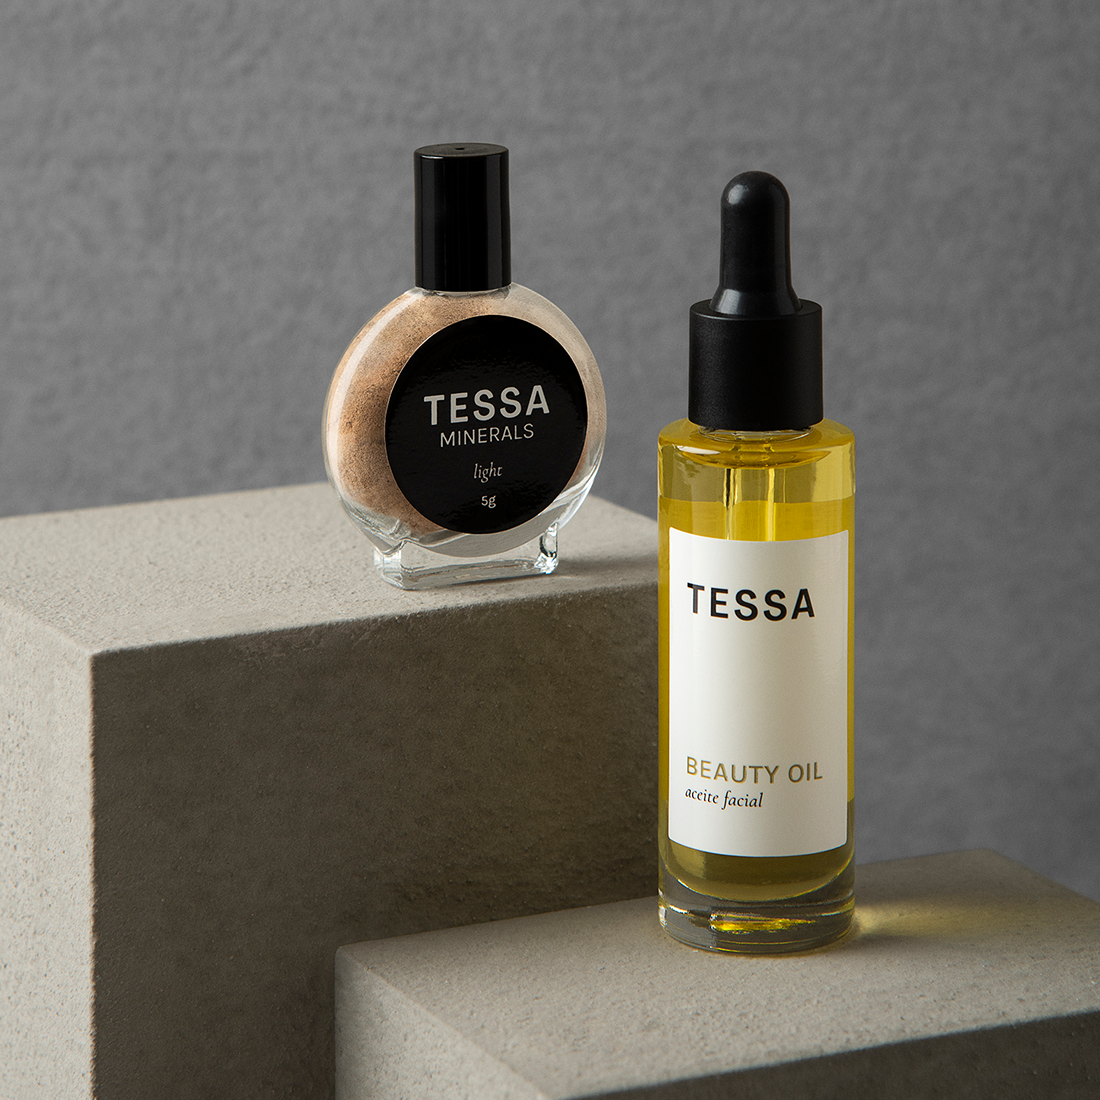 Pack de Maquillaje con Beauty Oil y Minerals Light marca Tessa